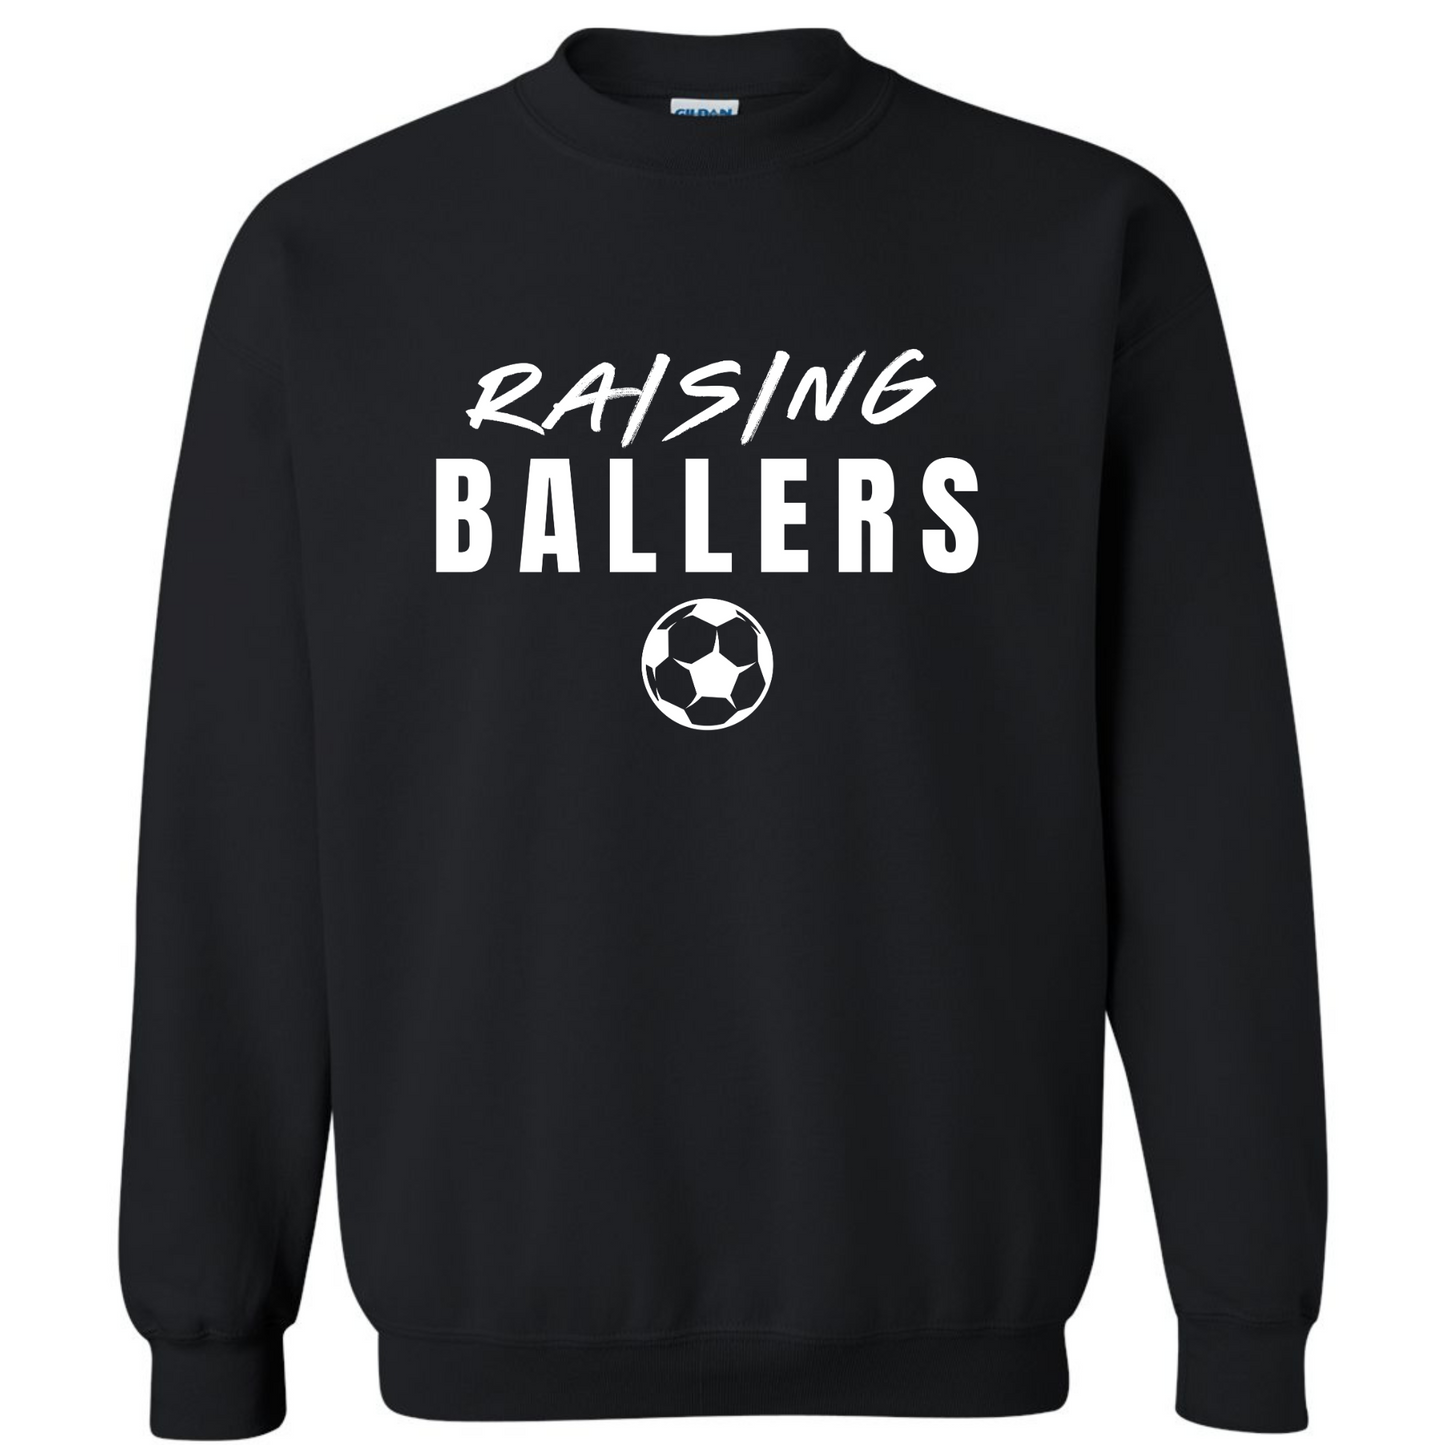 Raising Ballers Crewneck Sweatshirt (Soccer)